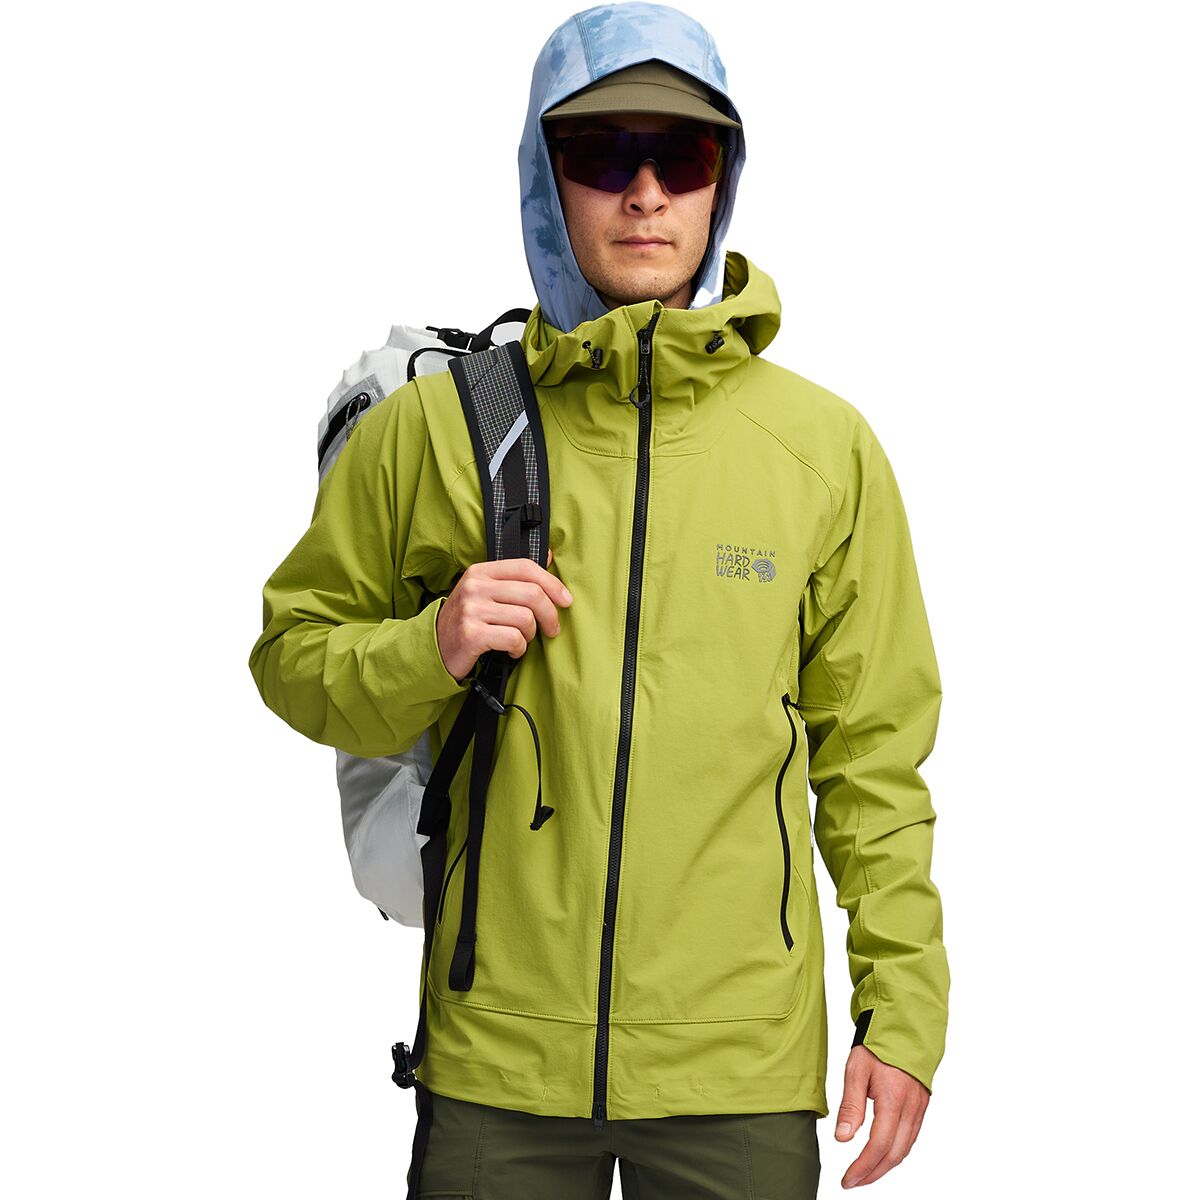 Chockstone Alpine LT Hooded Jacket - Men